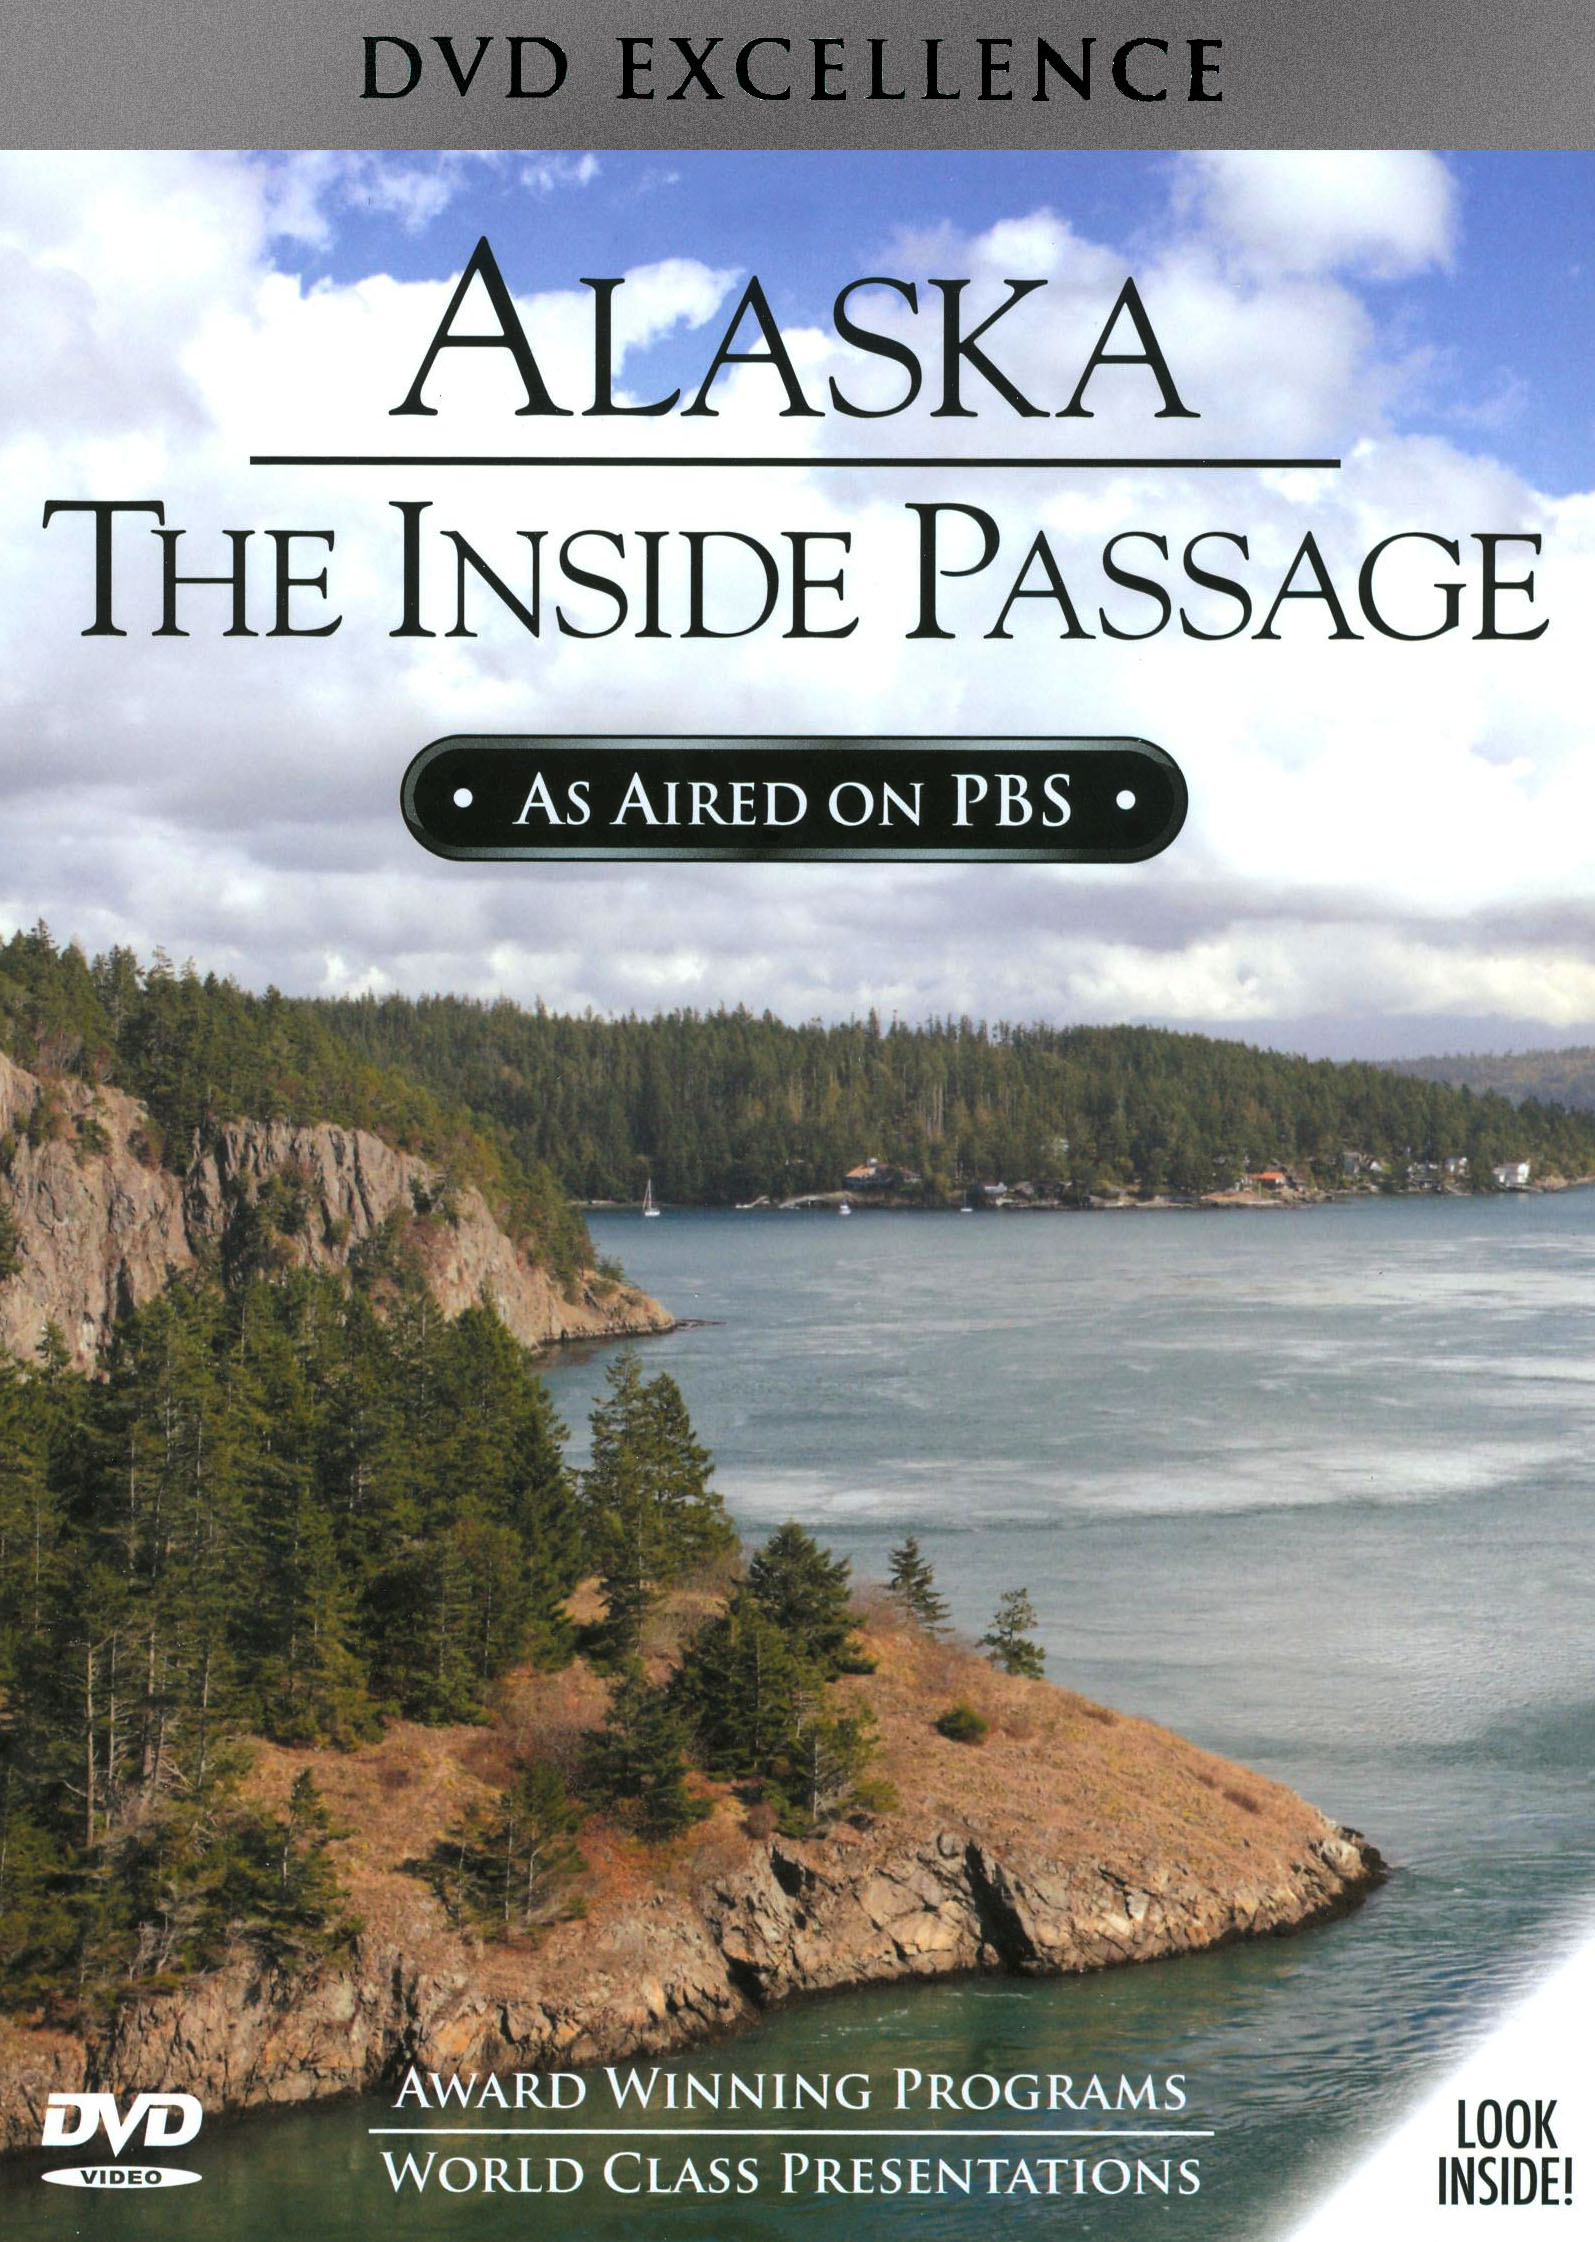 Alaska: The Inside Passage [DVD] [2005] - Best Buy